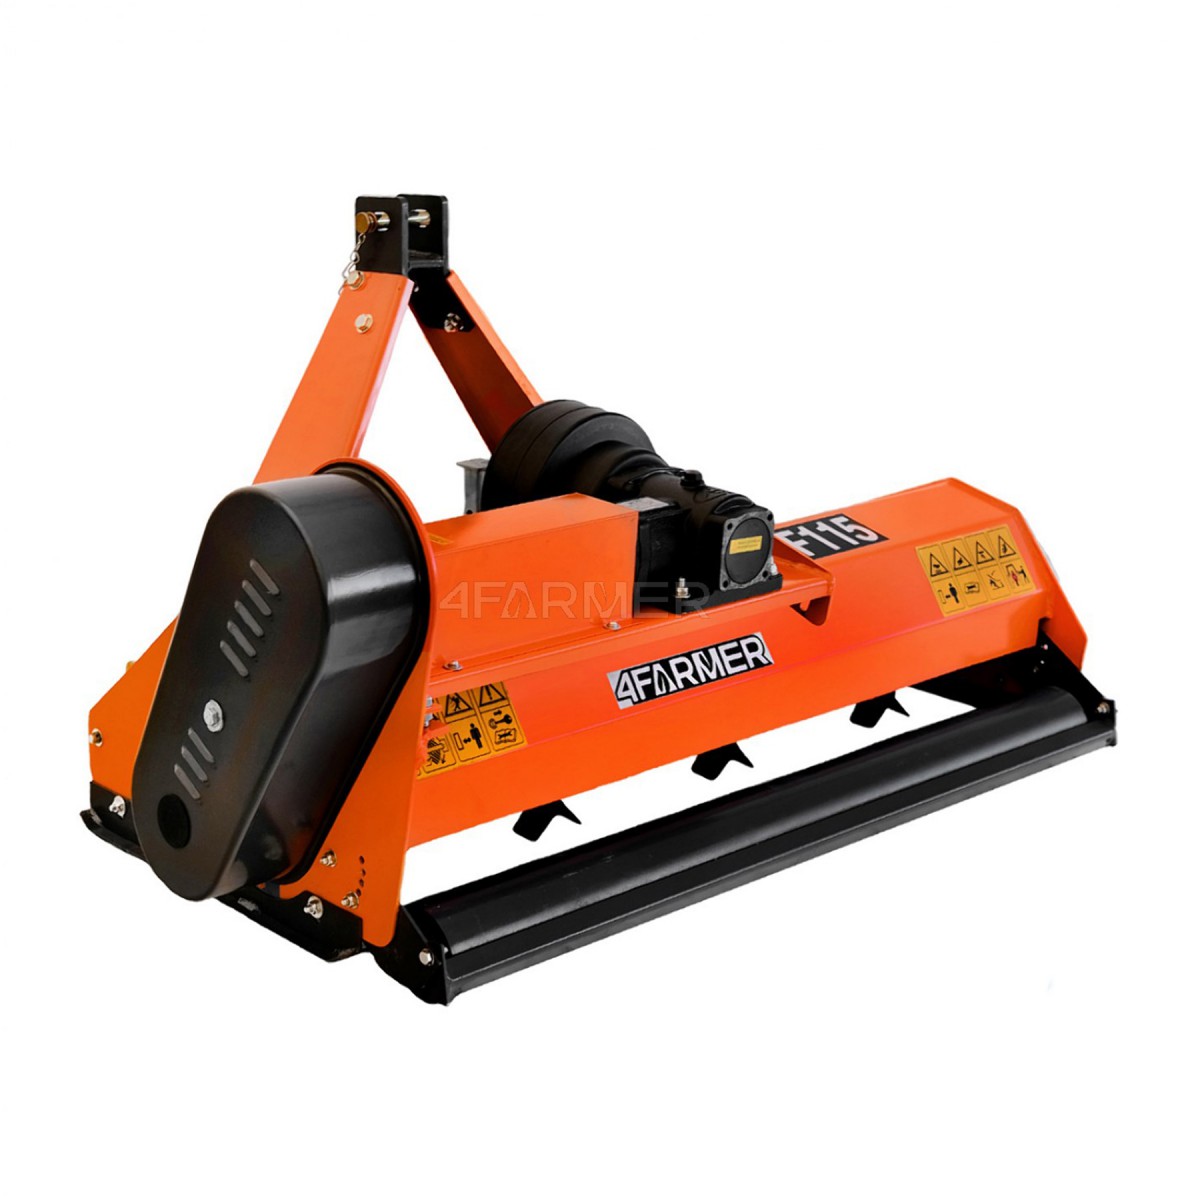 Flail mower EF 105 4FARMER - orange